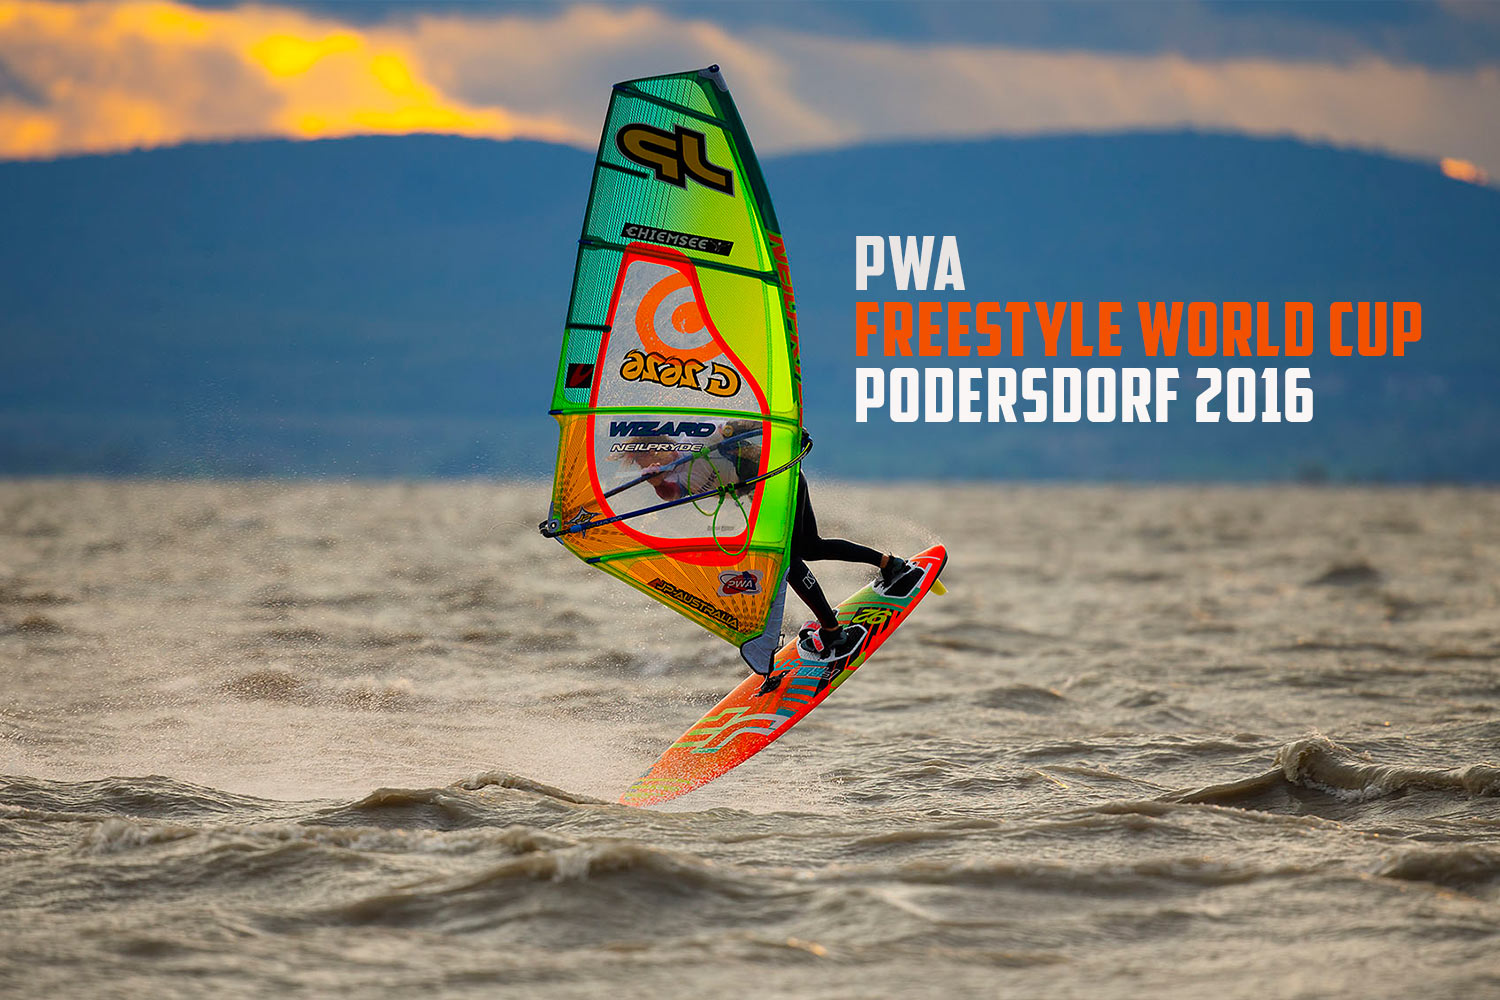 PWA World Cup Podersdorf 2016